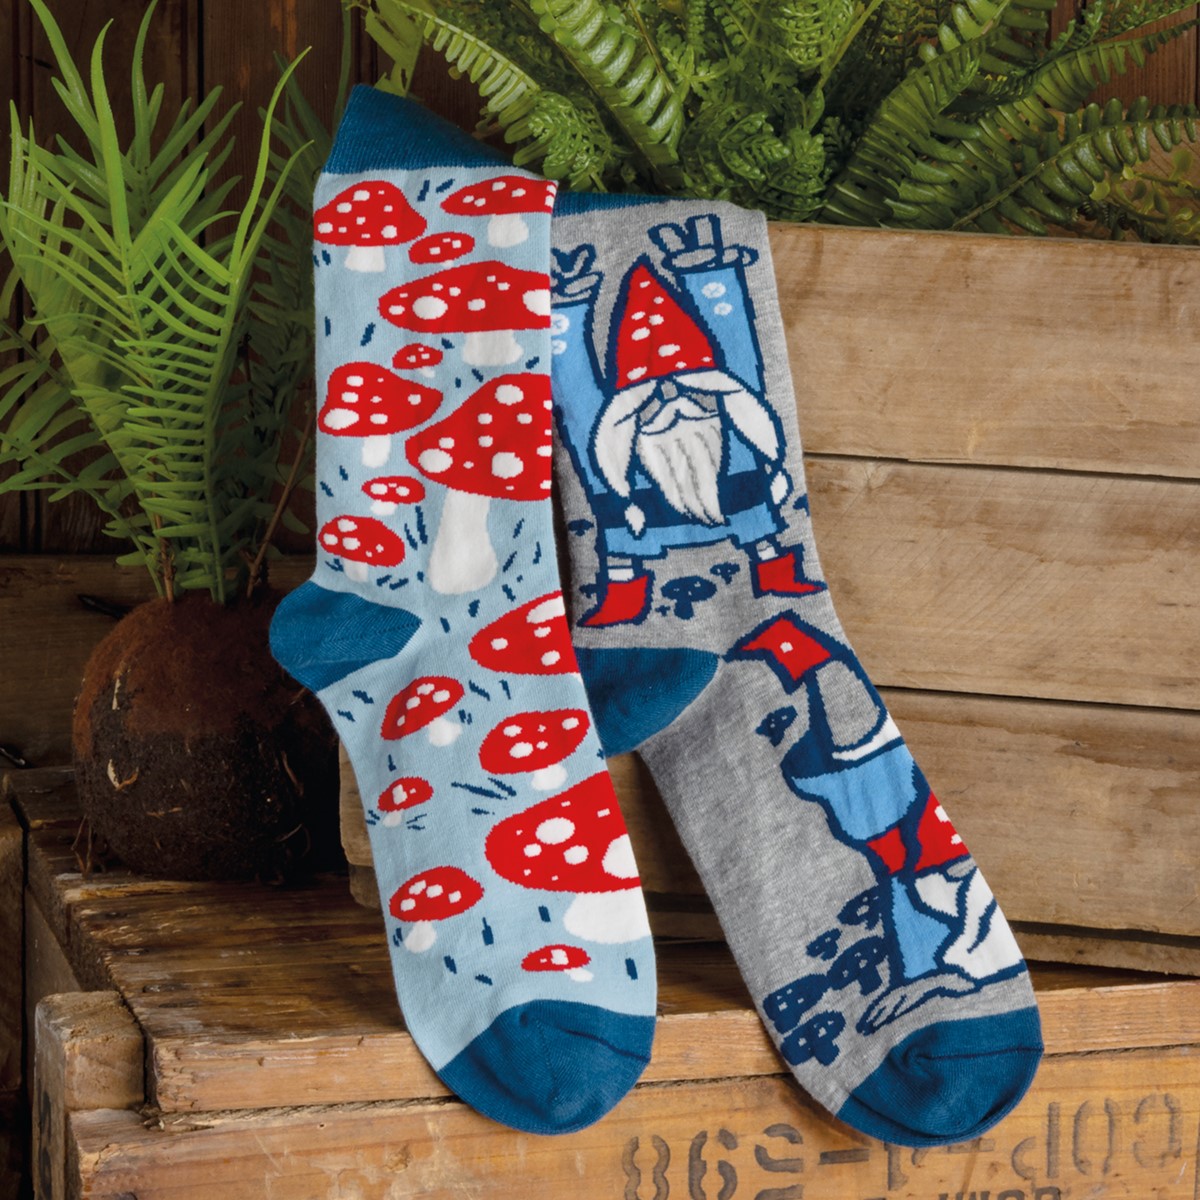 Socks - Gnomes & Mushrooms - One Size Fits Most - Cotton, Nylon, Spandex